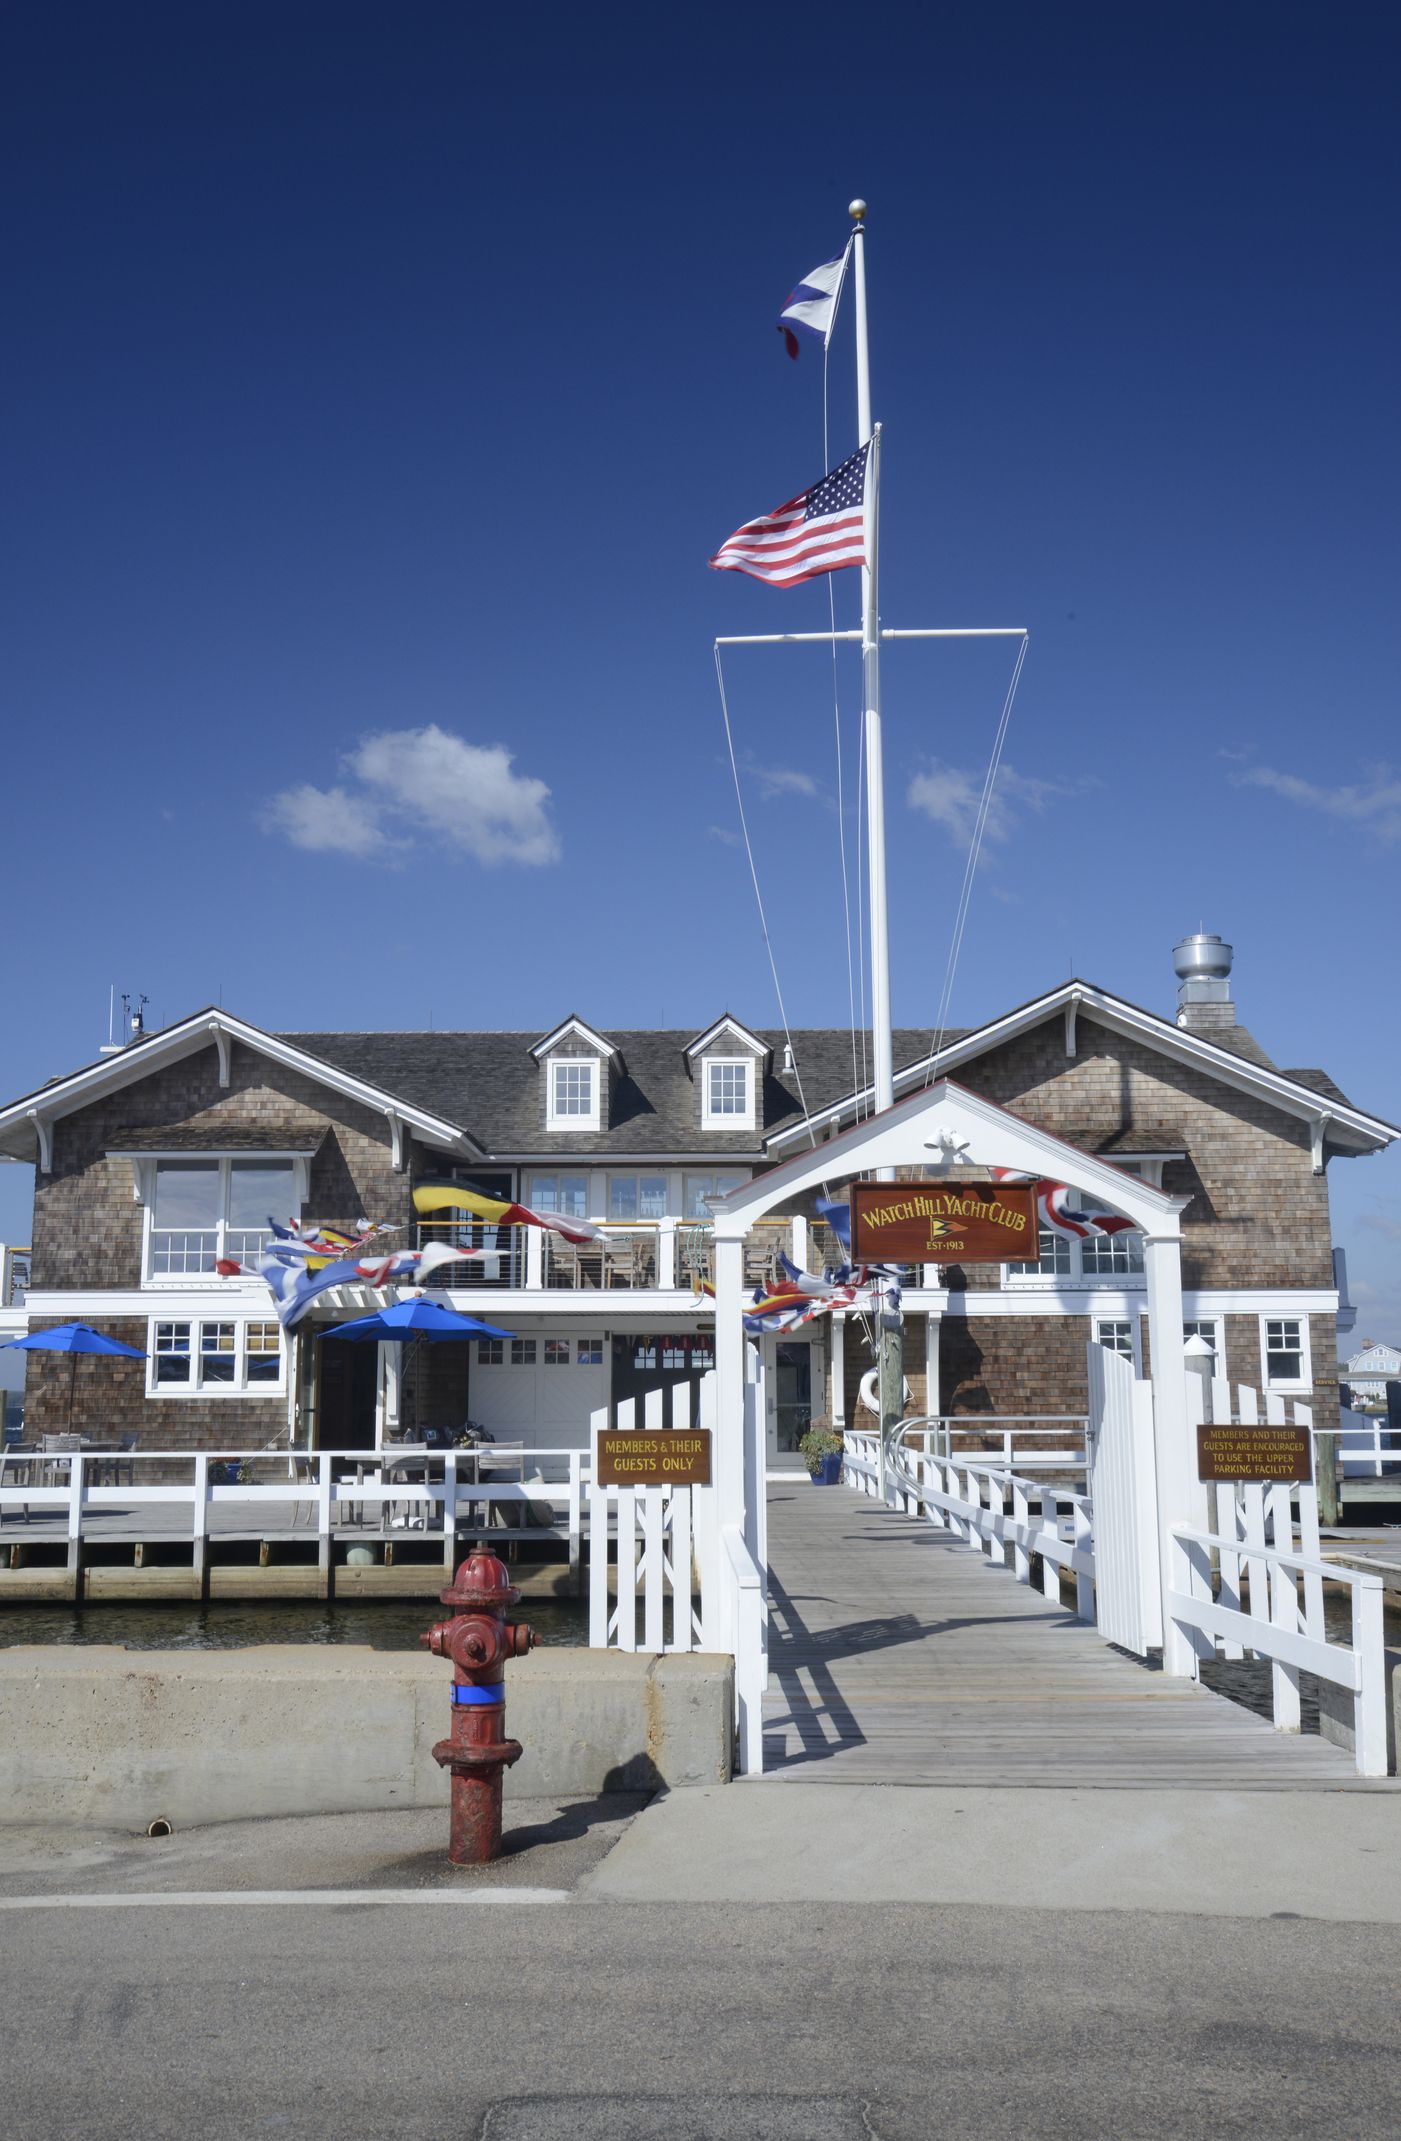 Yacht club with American flag flying in Watch Hill, Rhode Island, USA